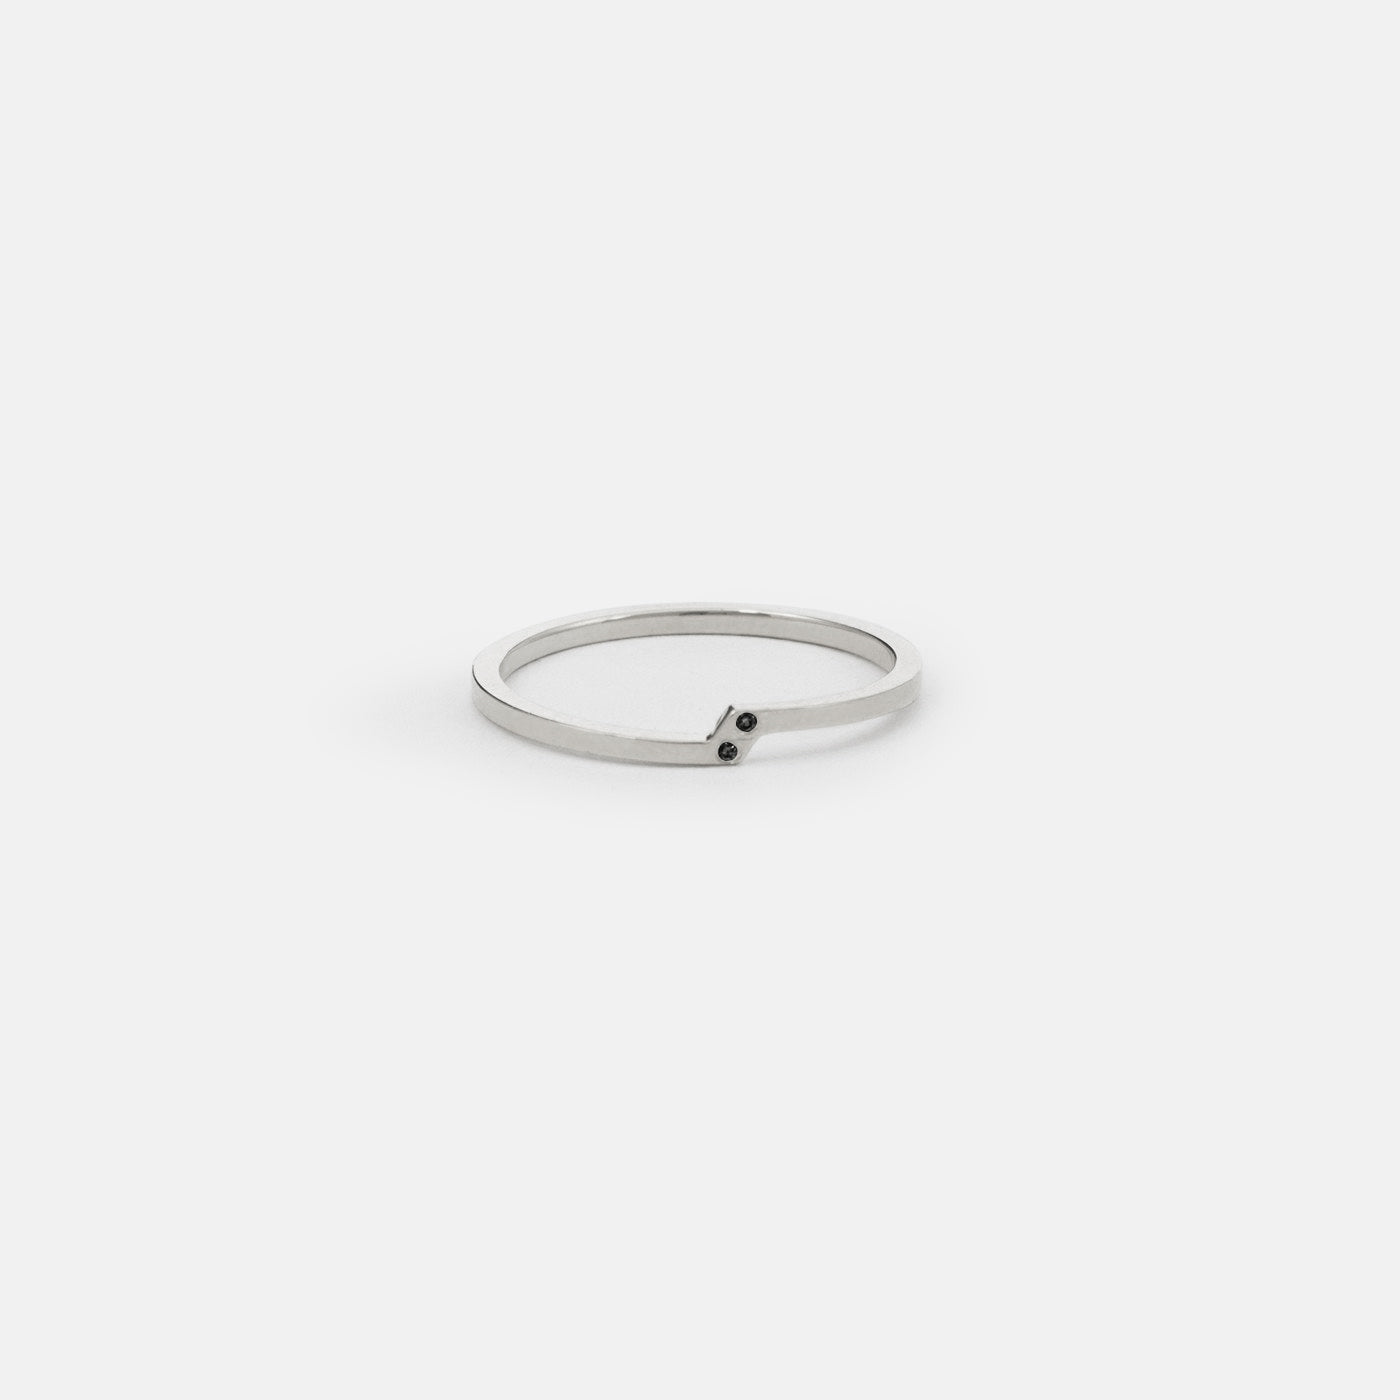 Rili Designer Ring in 14k White Gold set with Black Diamonds By SHW Fine Jewelry NYC